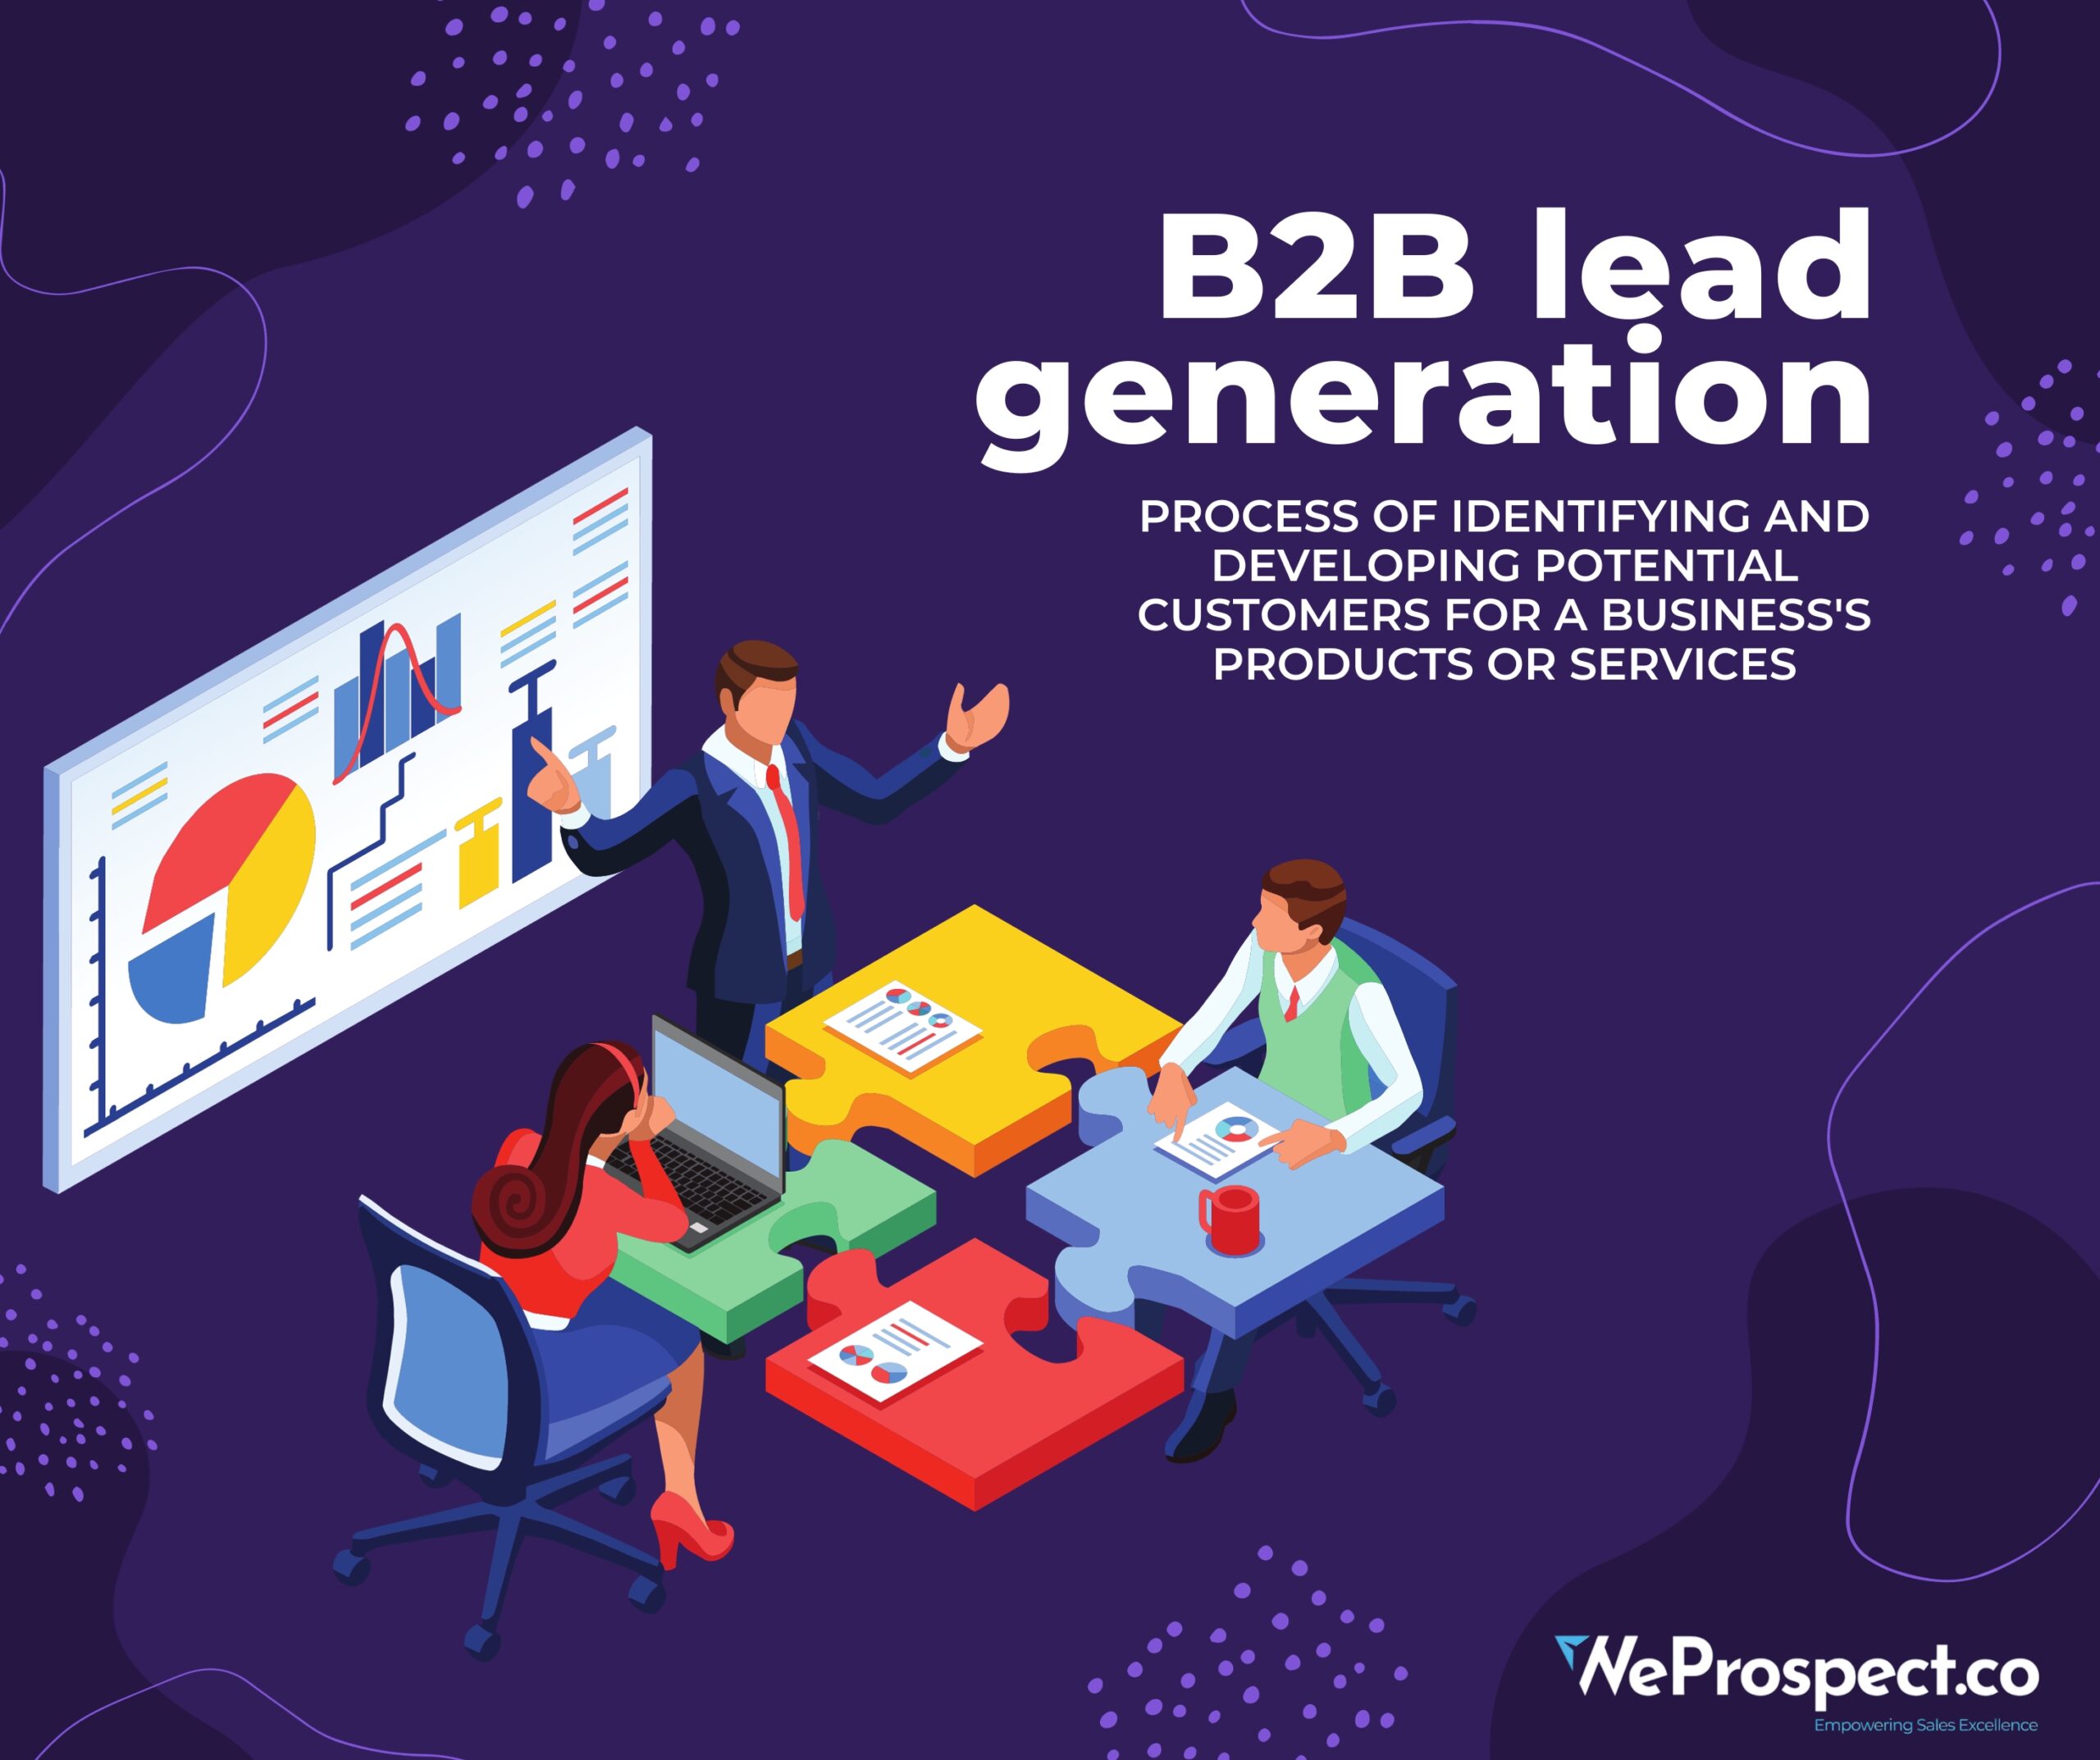 B2B Lead generation